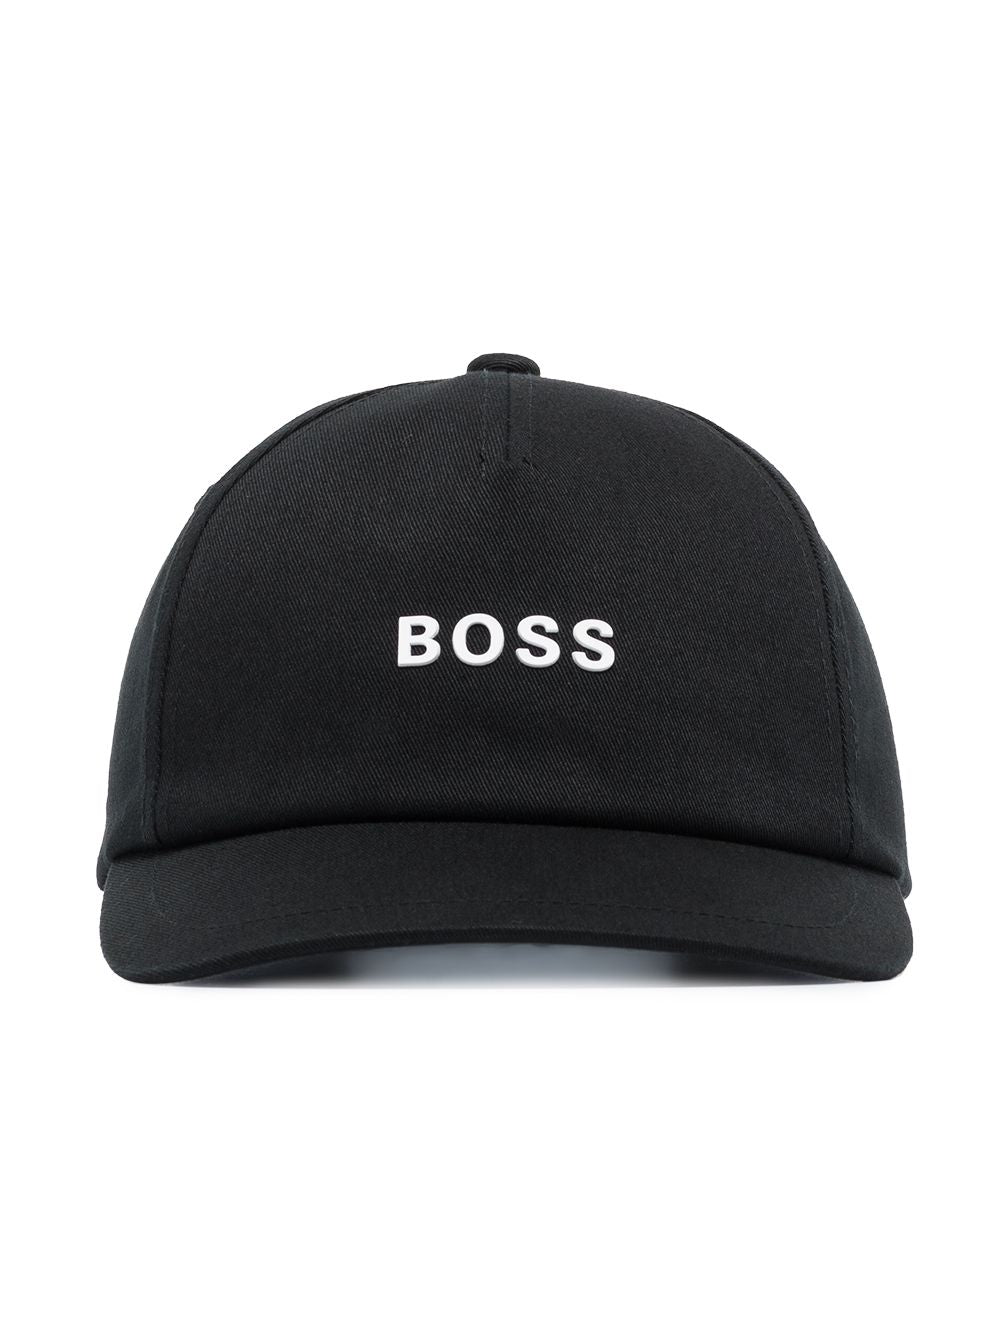 BOSS Raised logo baseball cap Black - MAISONDEFASHION.COM